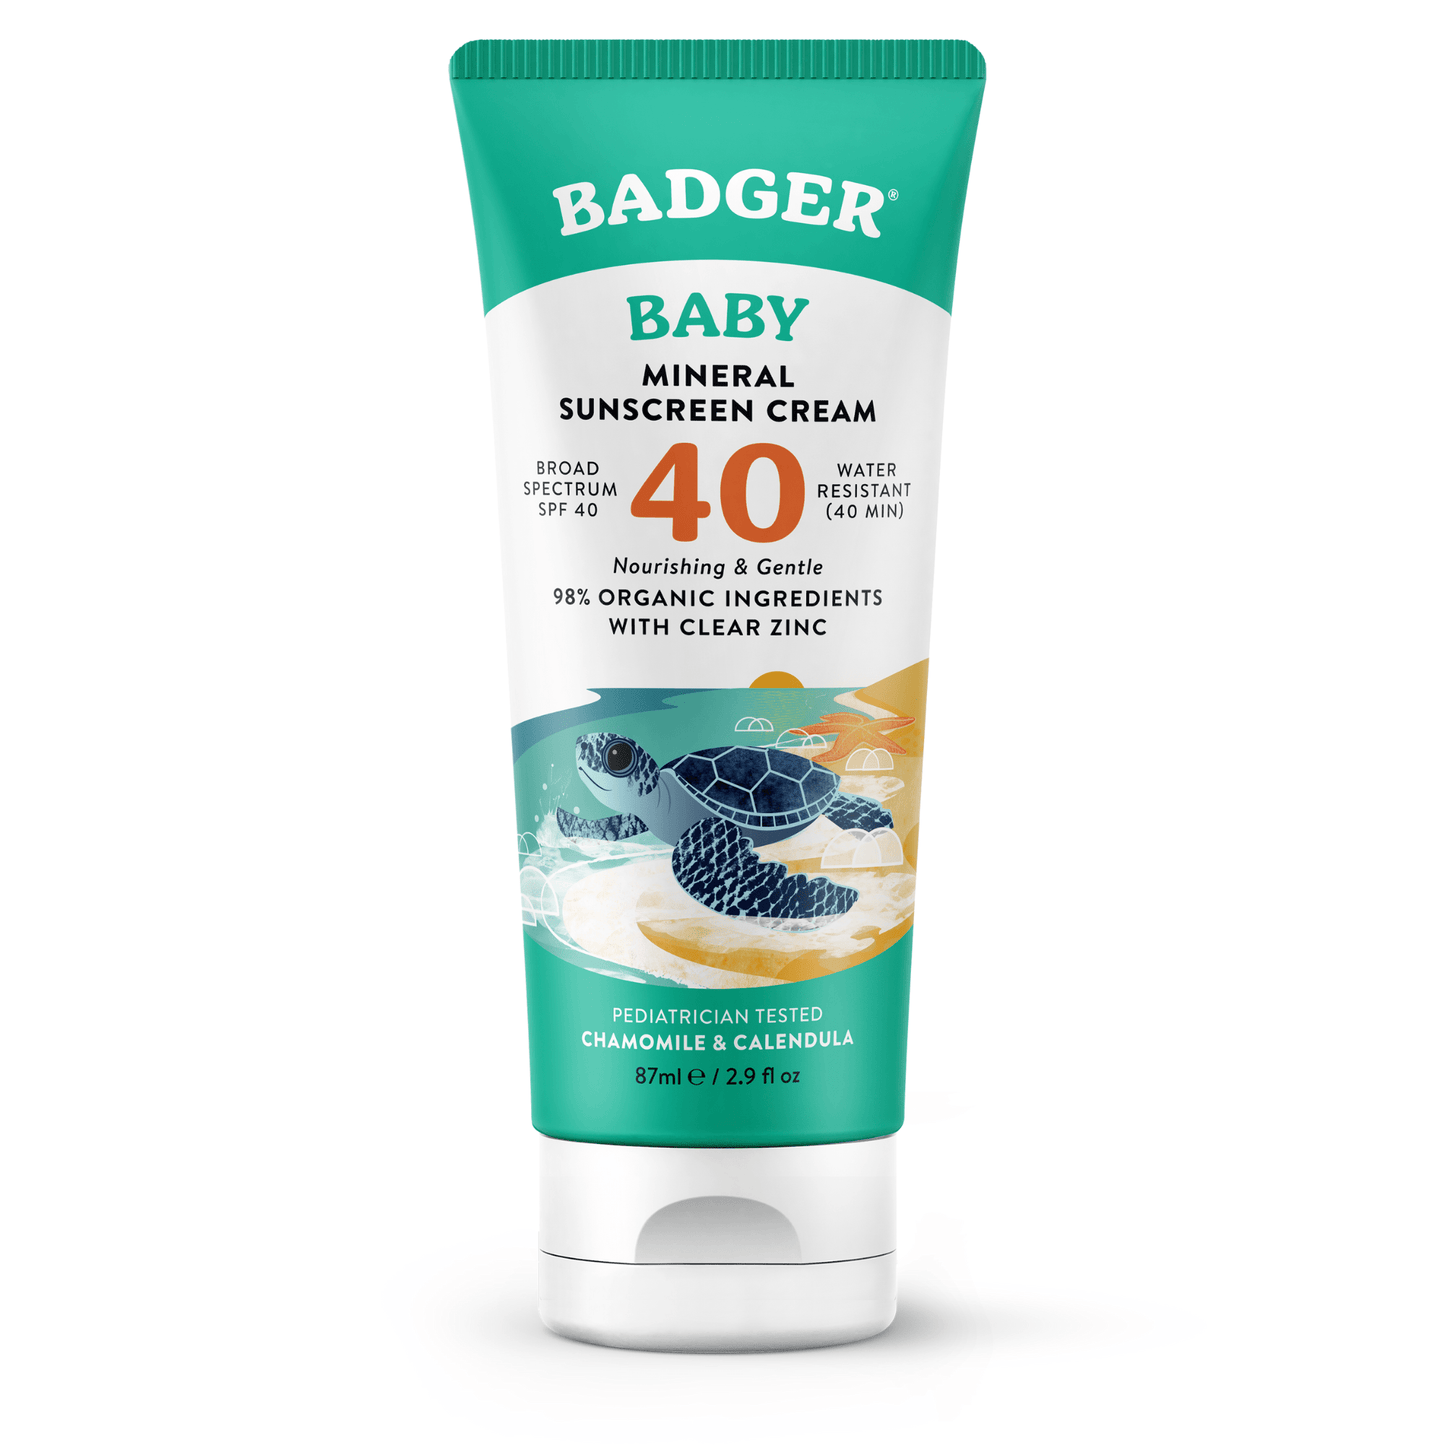 Primary Image of Baby SPF 30 Sunscreen Cream